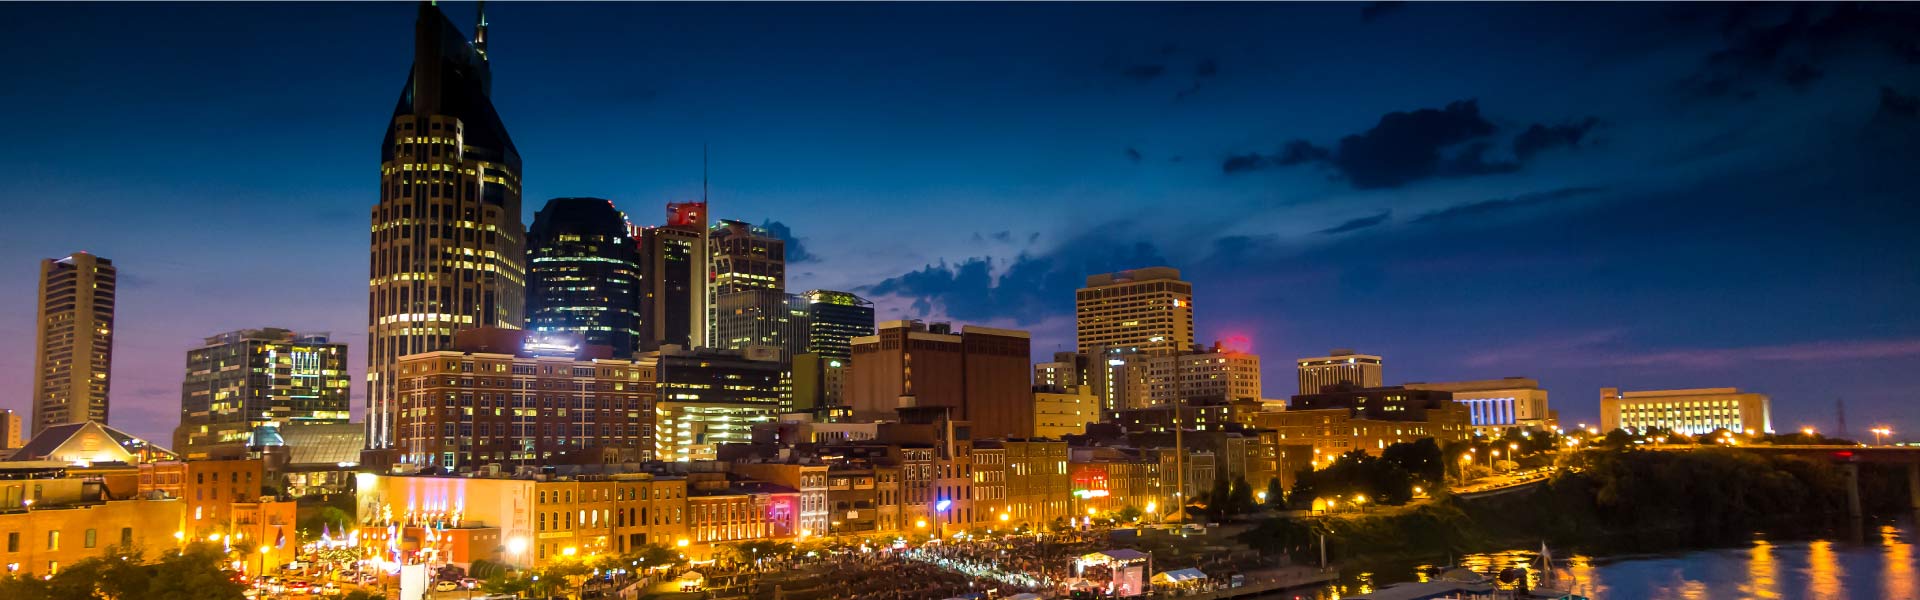 Downtown Nashville skyline at night